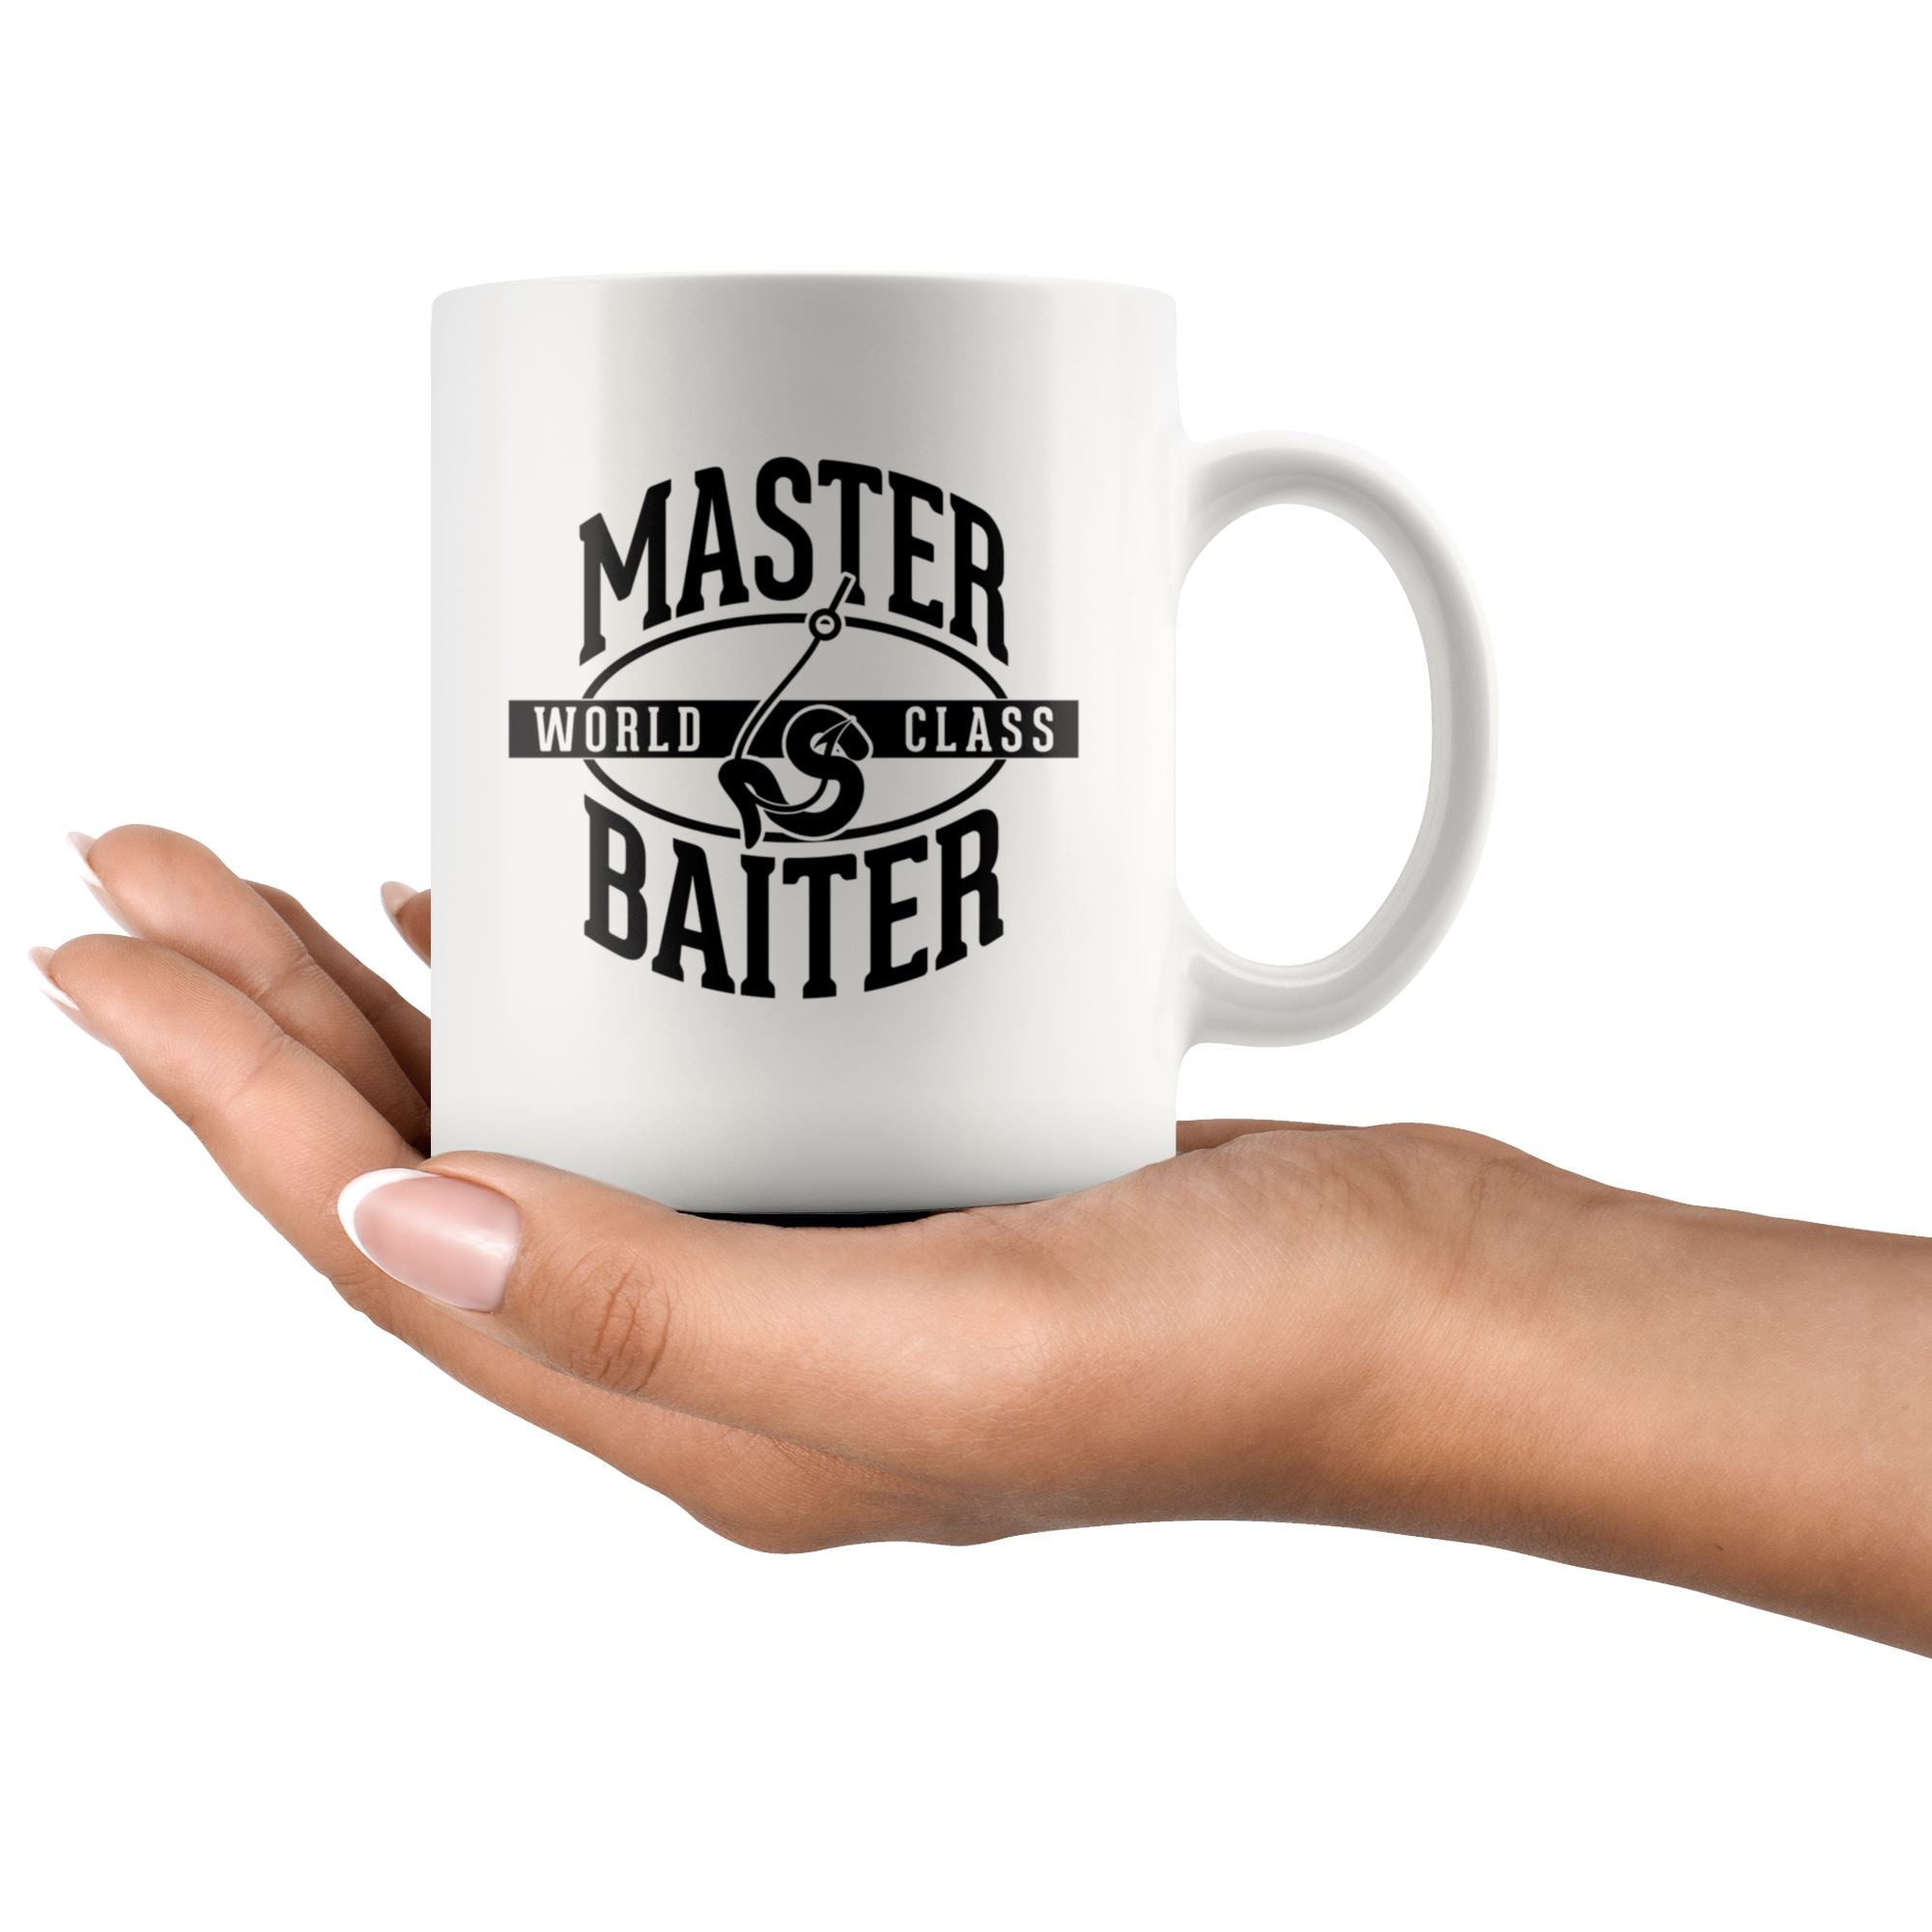 Master Baiter Mug Drinkware teelaunch 